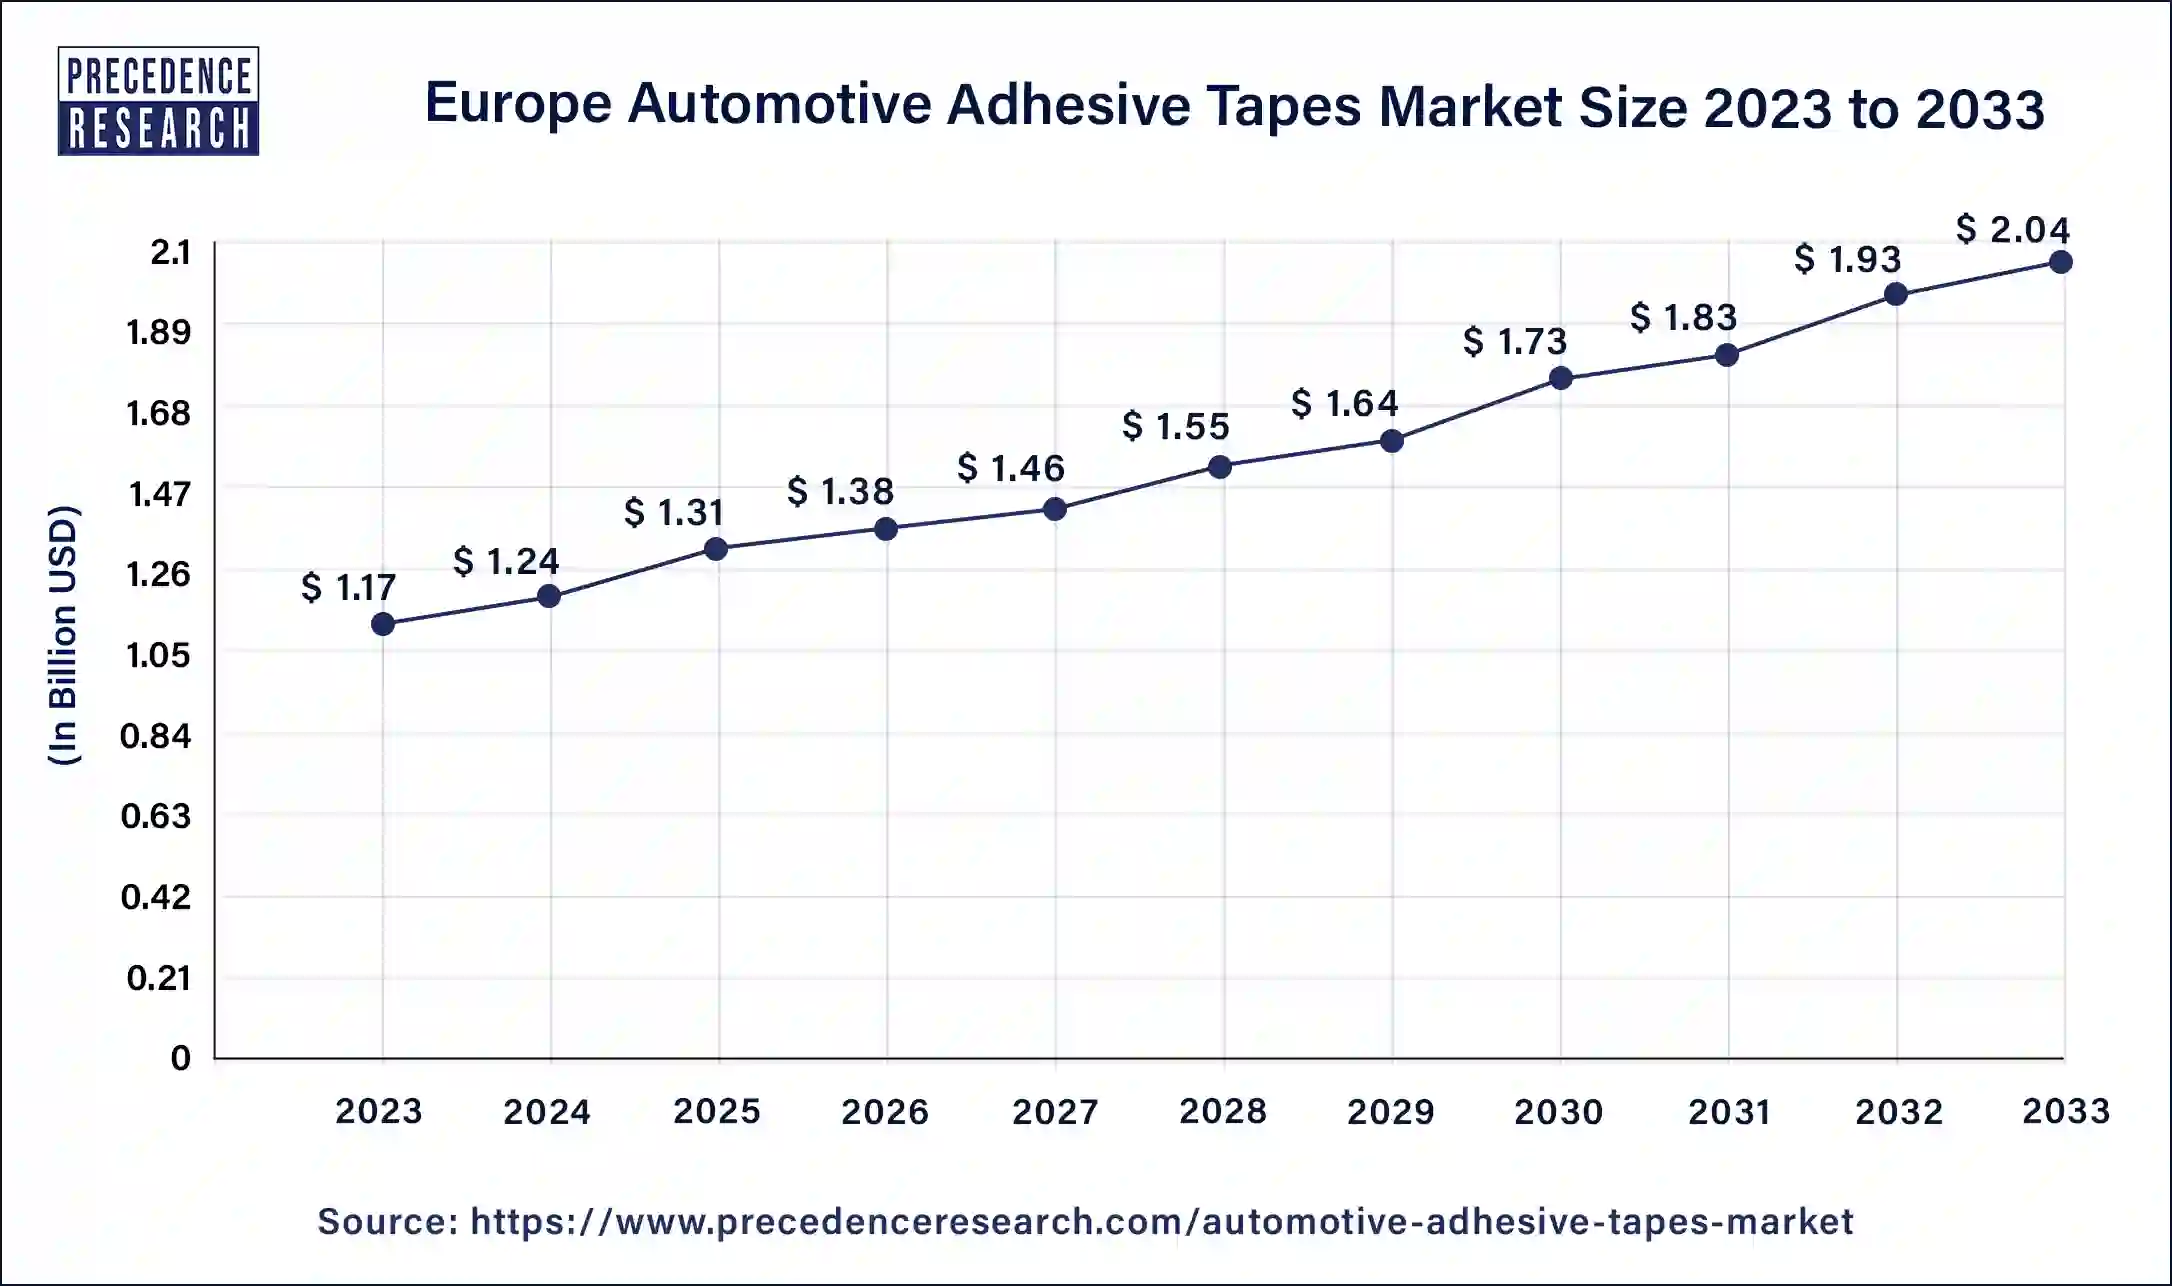 Europe Automotive Adhesive Tapes Market Size 2024 to 2033